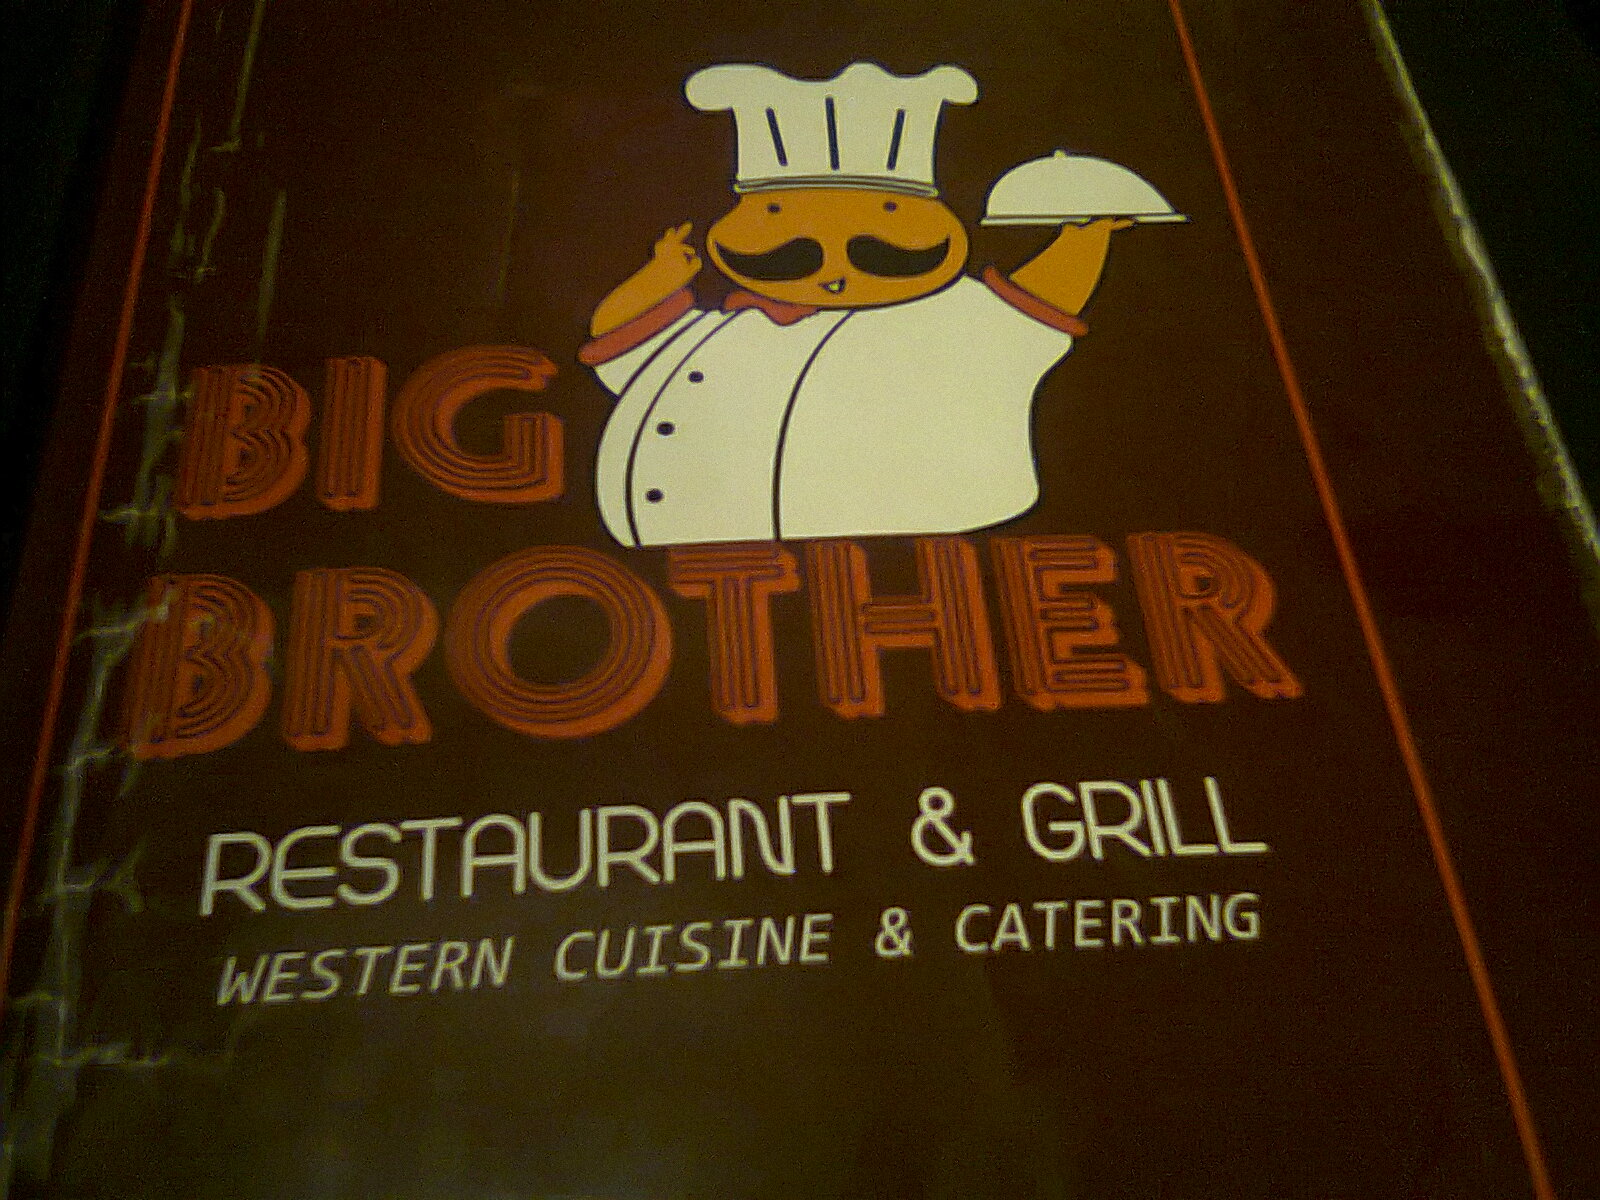 Me & MiNe: Big Brother Restaurant & Grill